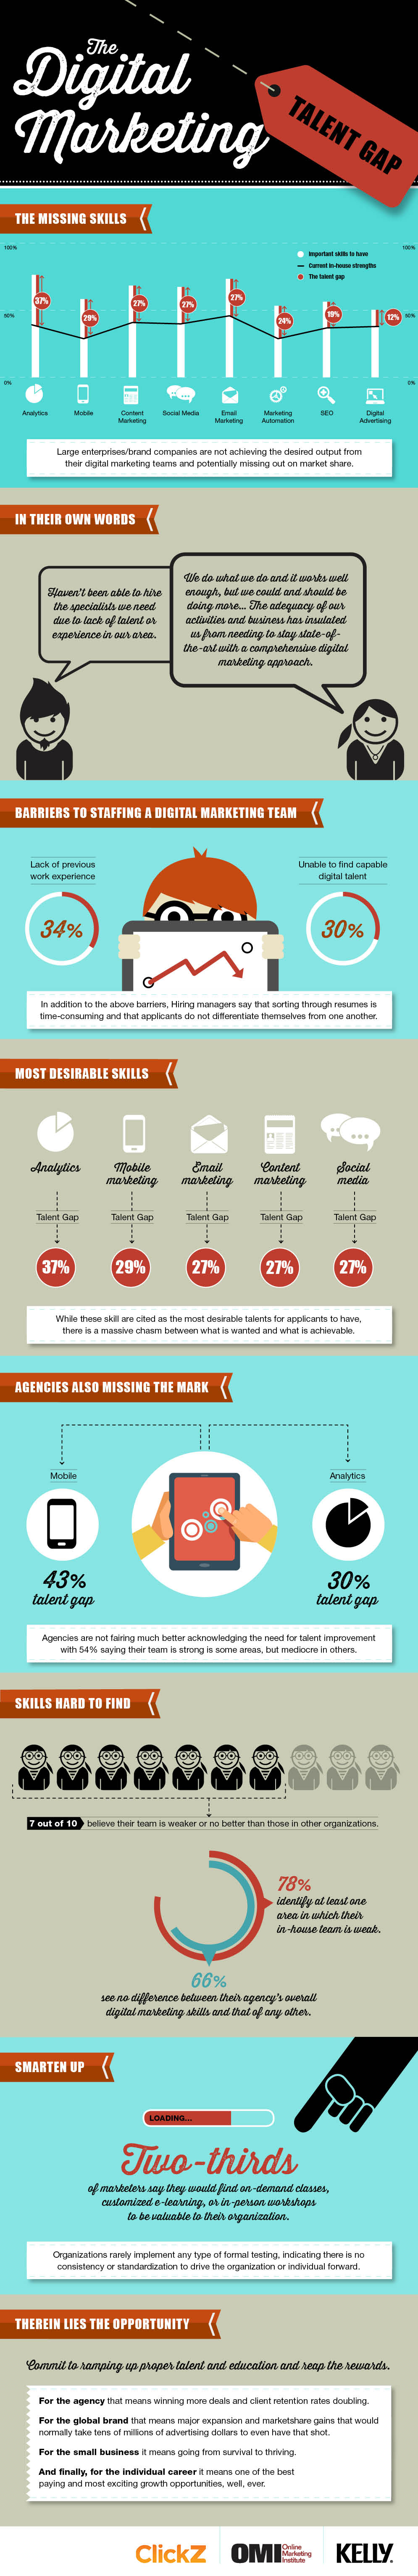 digital marketing skills infographic